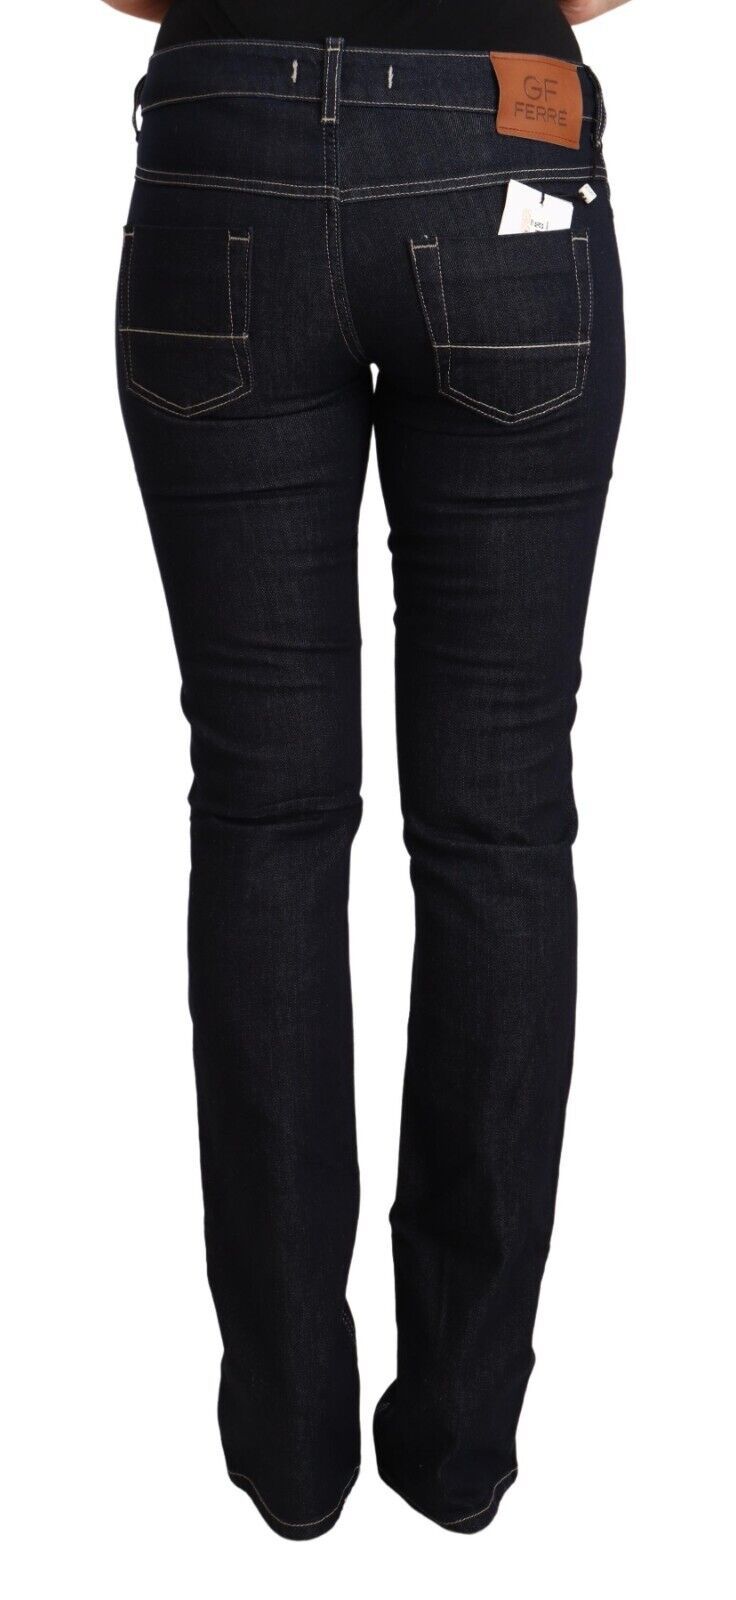 GF Ferre Chic Low Waist Skinny Jeans in Timeless Black